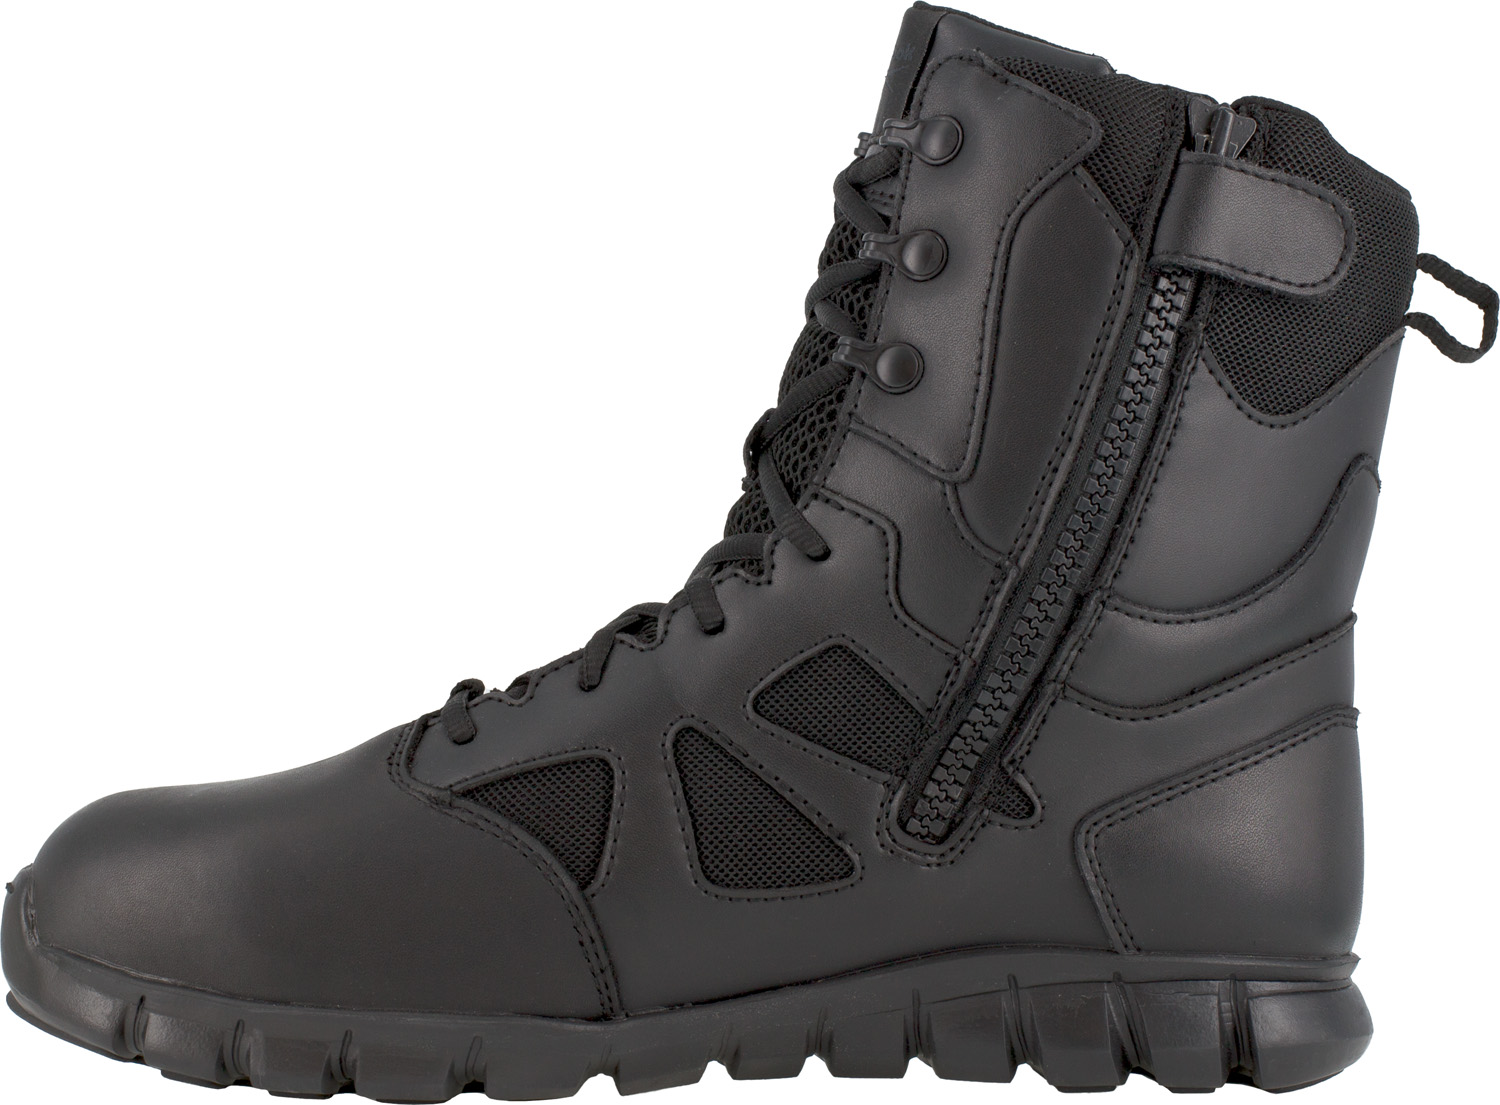 Reebok Work Men's Comp Toe EH WP Tactical Boot - image 3 of 4